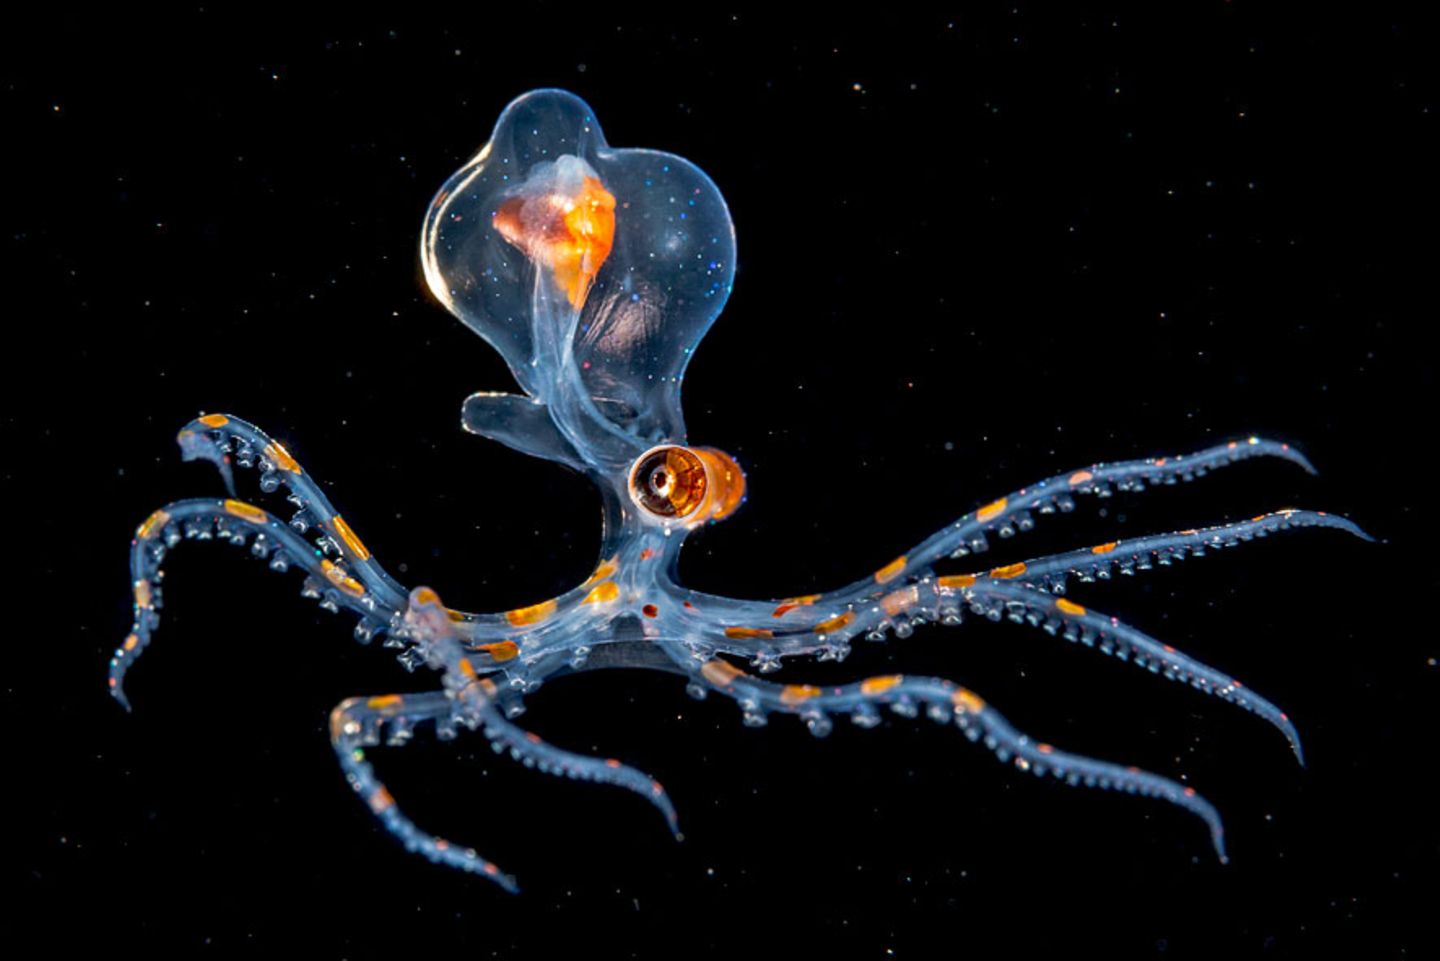 Auge in Auge mit dem Oktopus